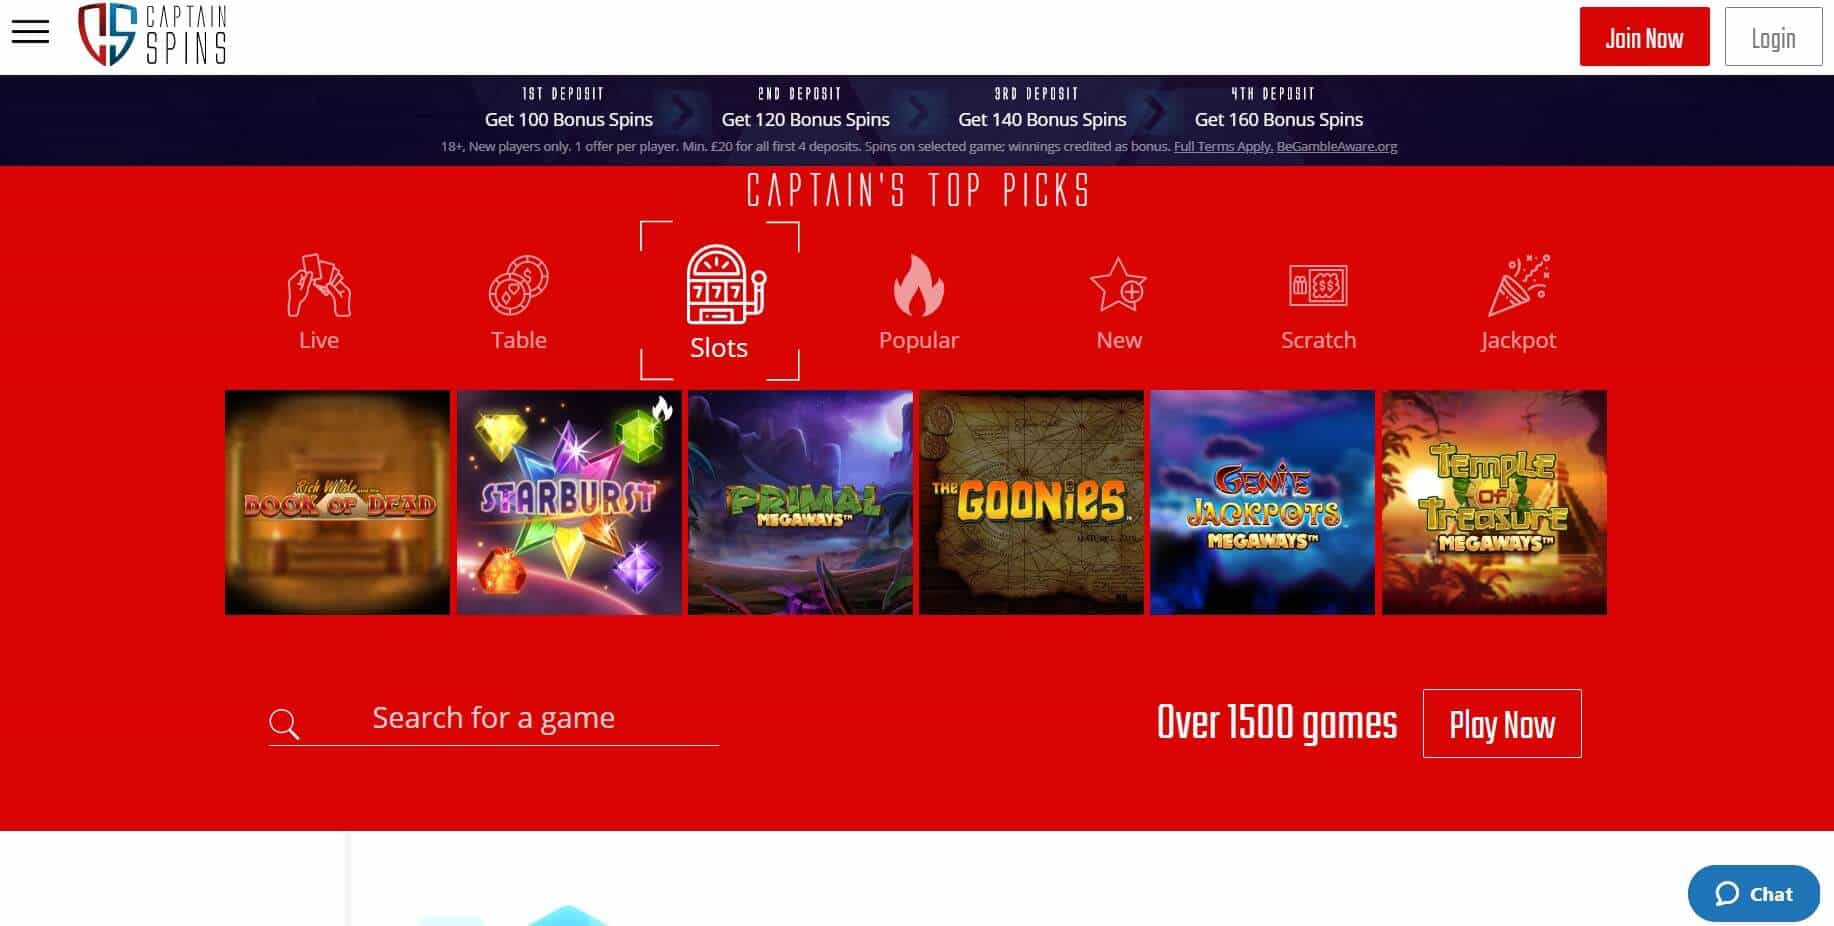 Captain Spins Casino slots